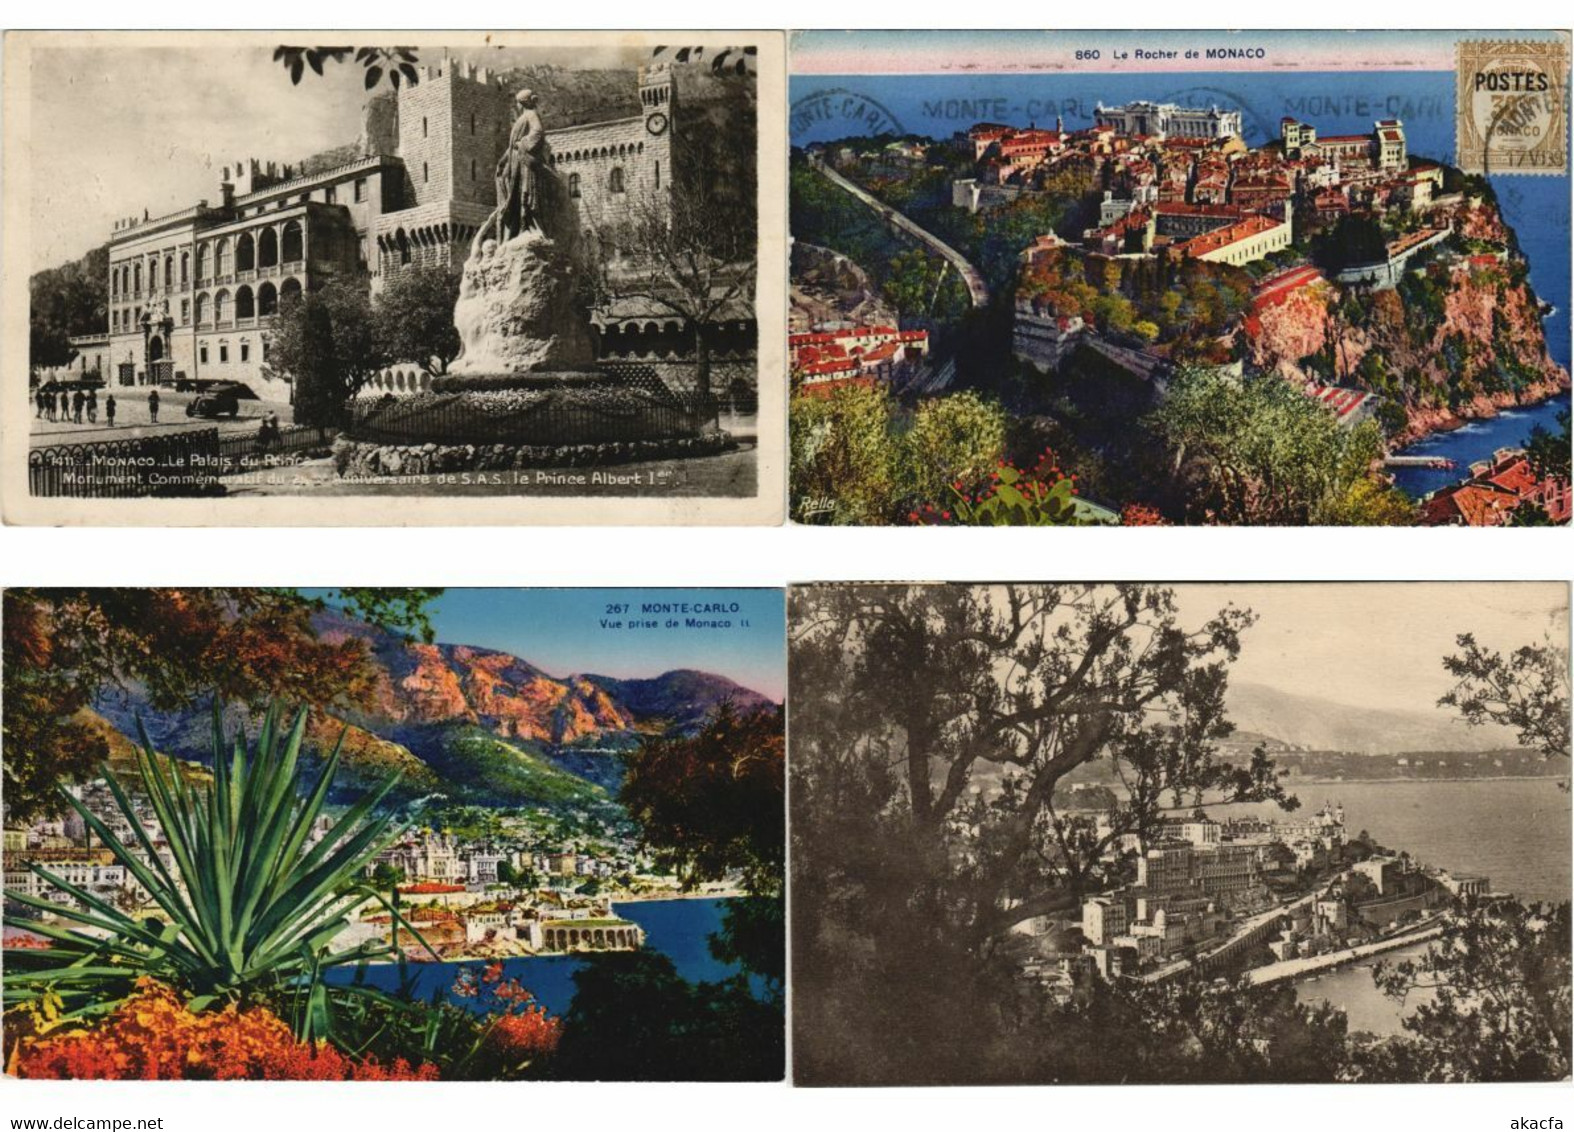 MONACO 83 Vintage Postcards Pre-1940 (L2913)